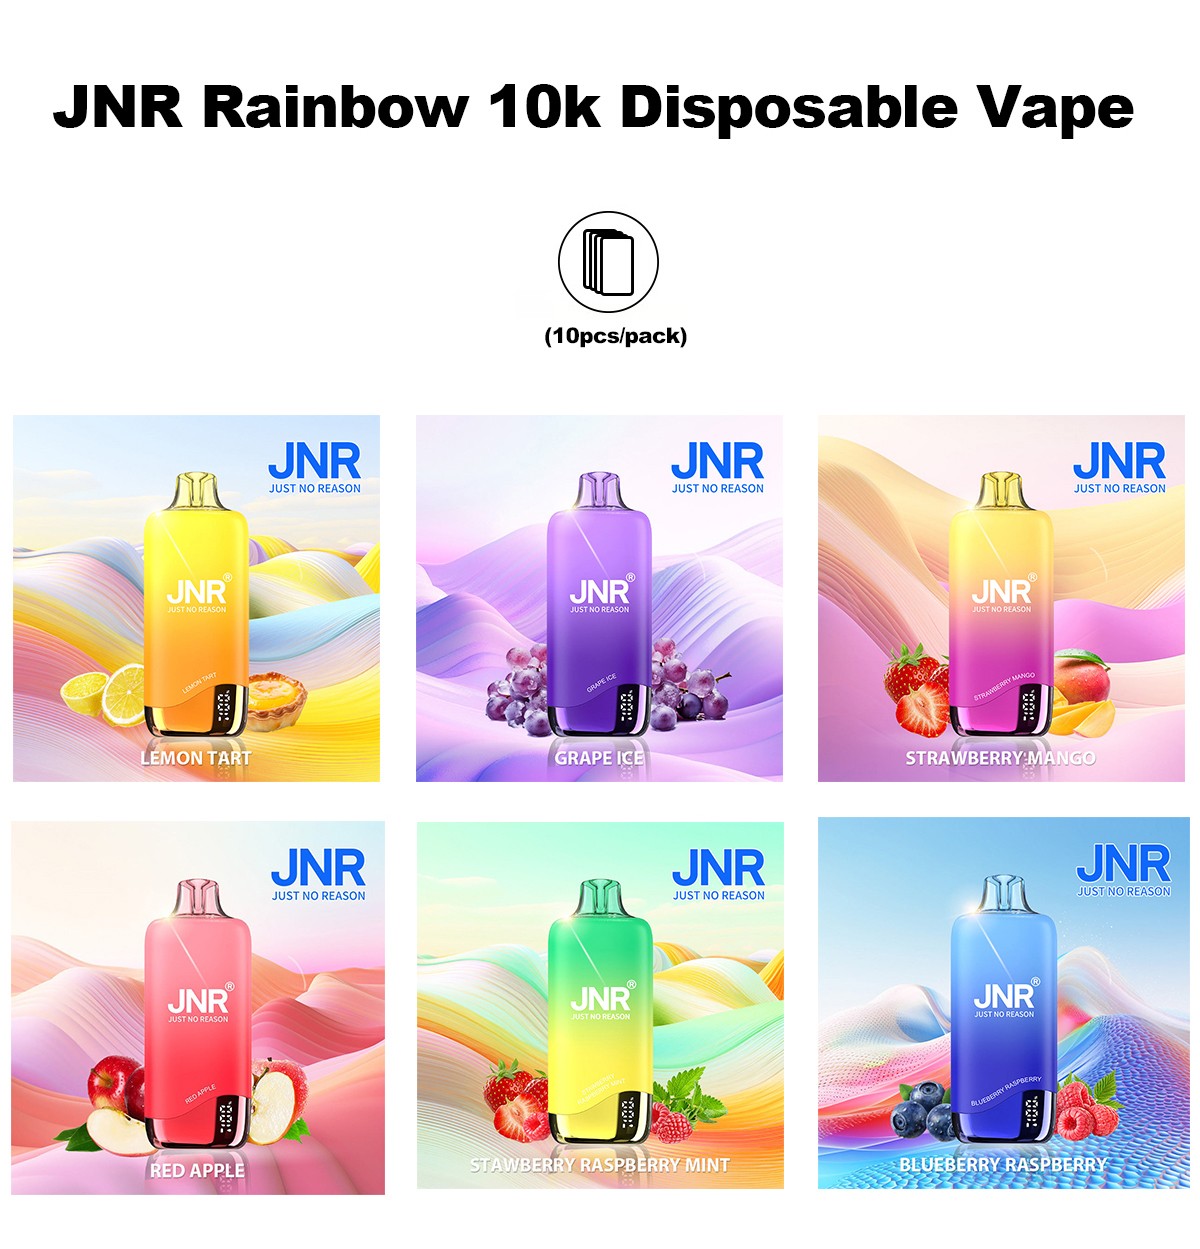 JNR Rainbow 10k Disposable